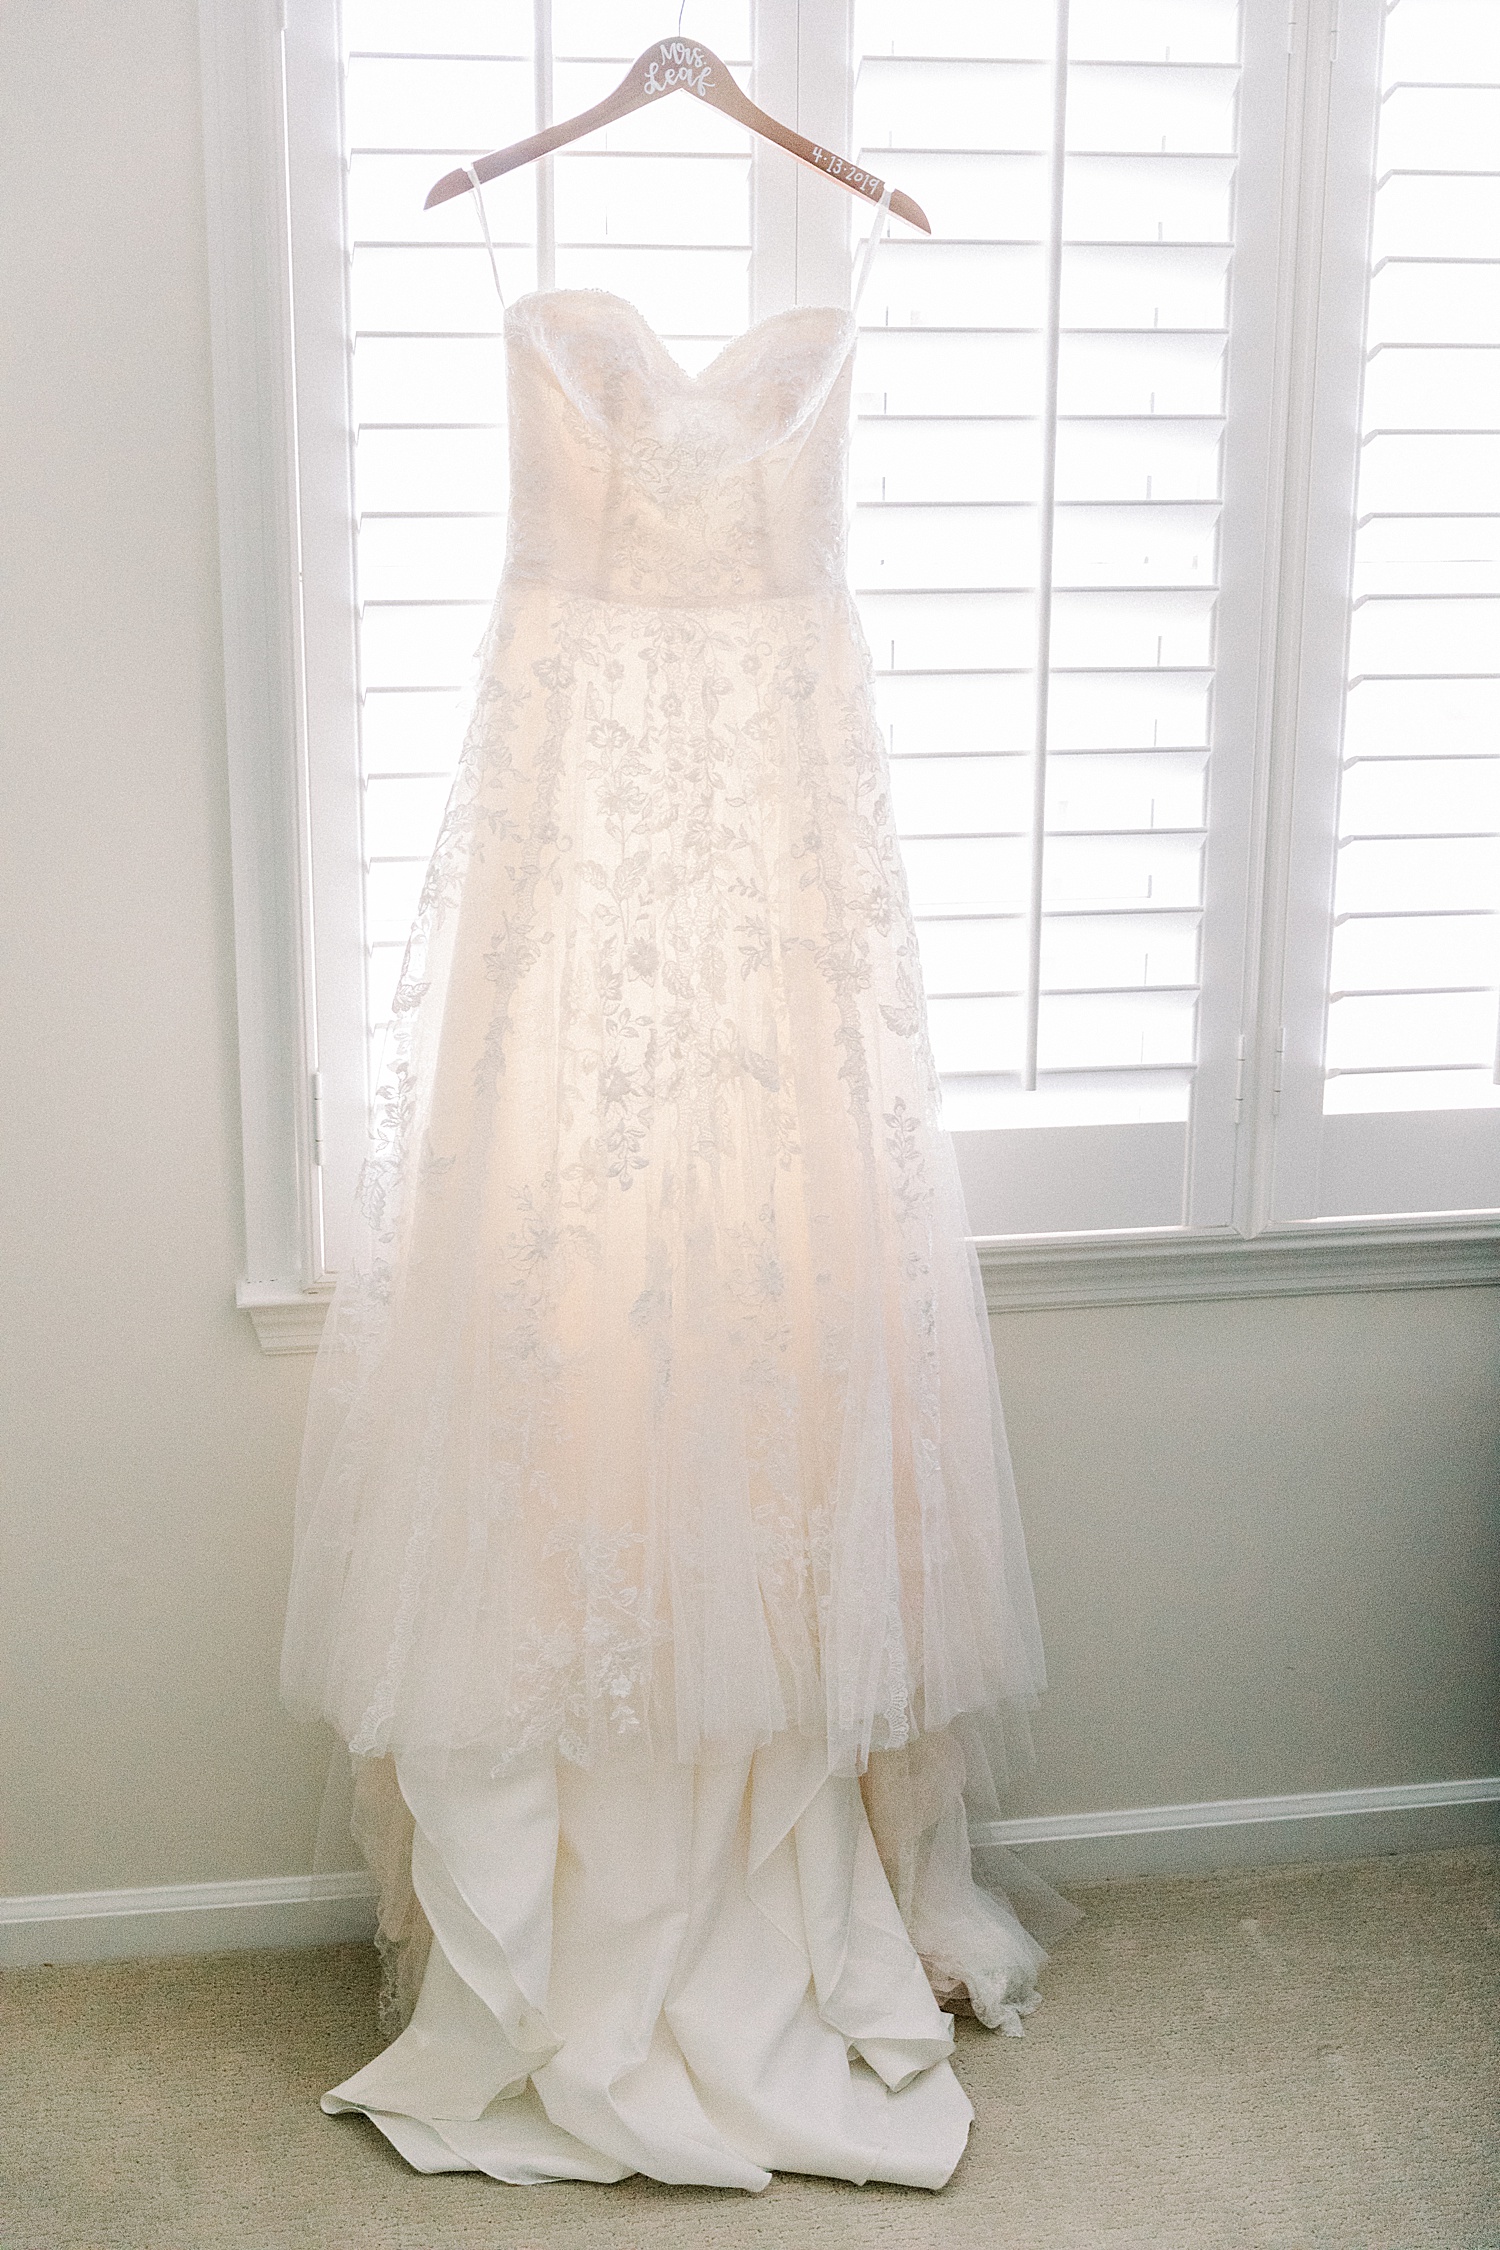 Bride's Wedding dress